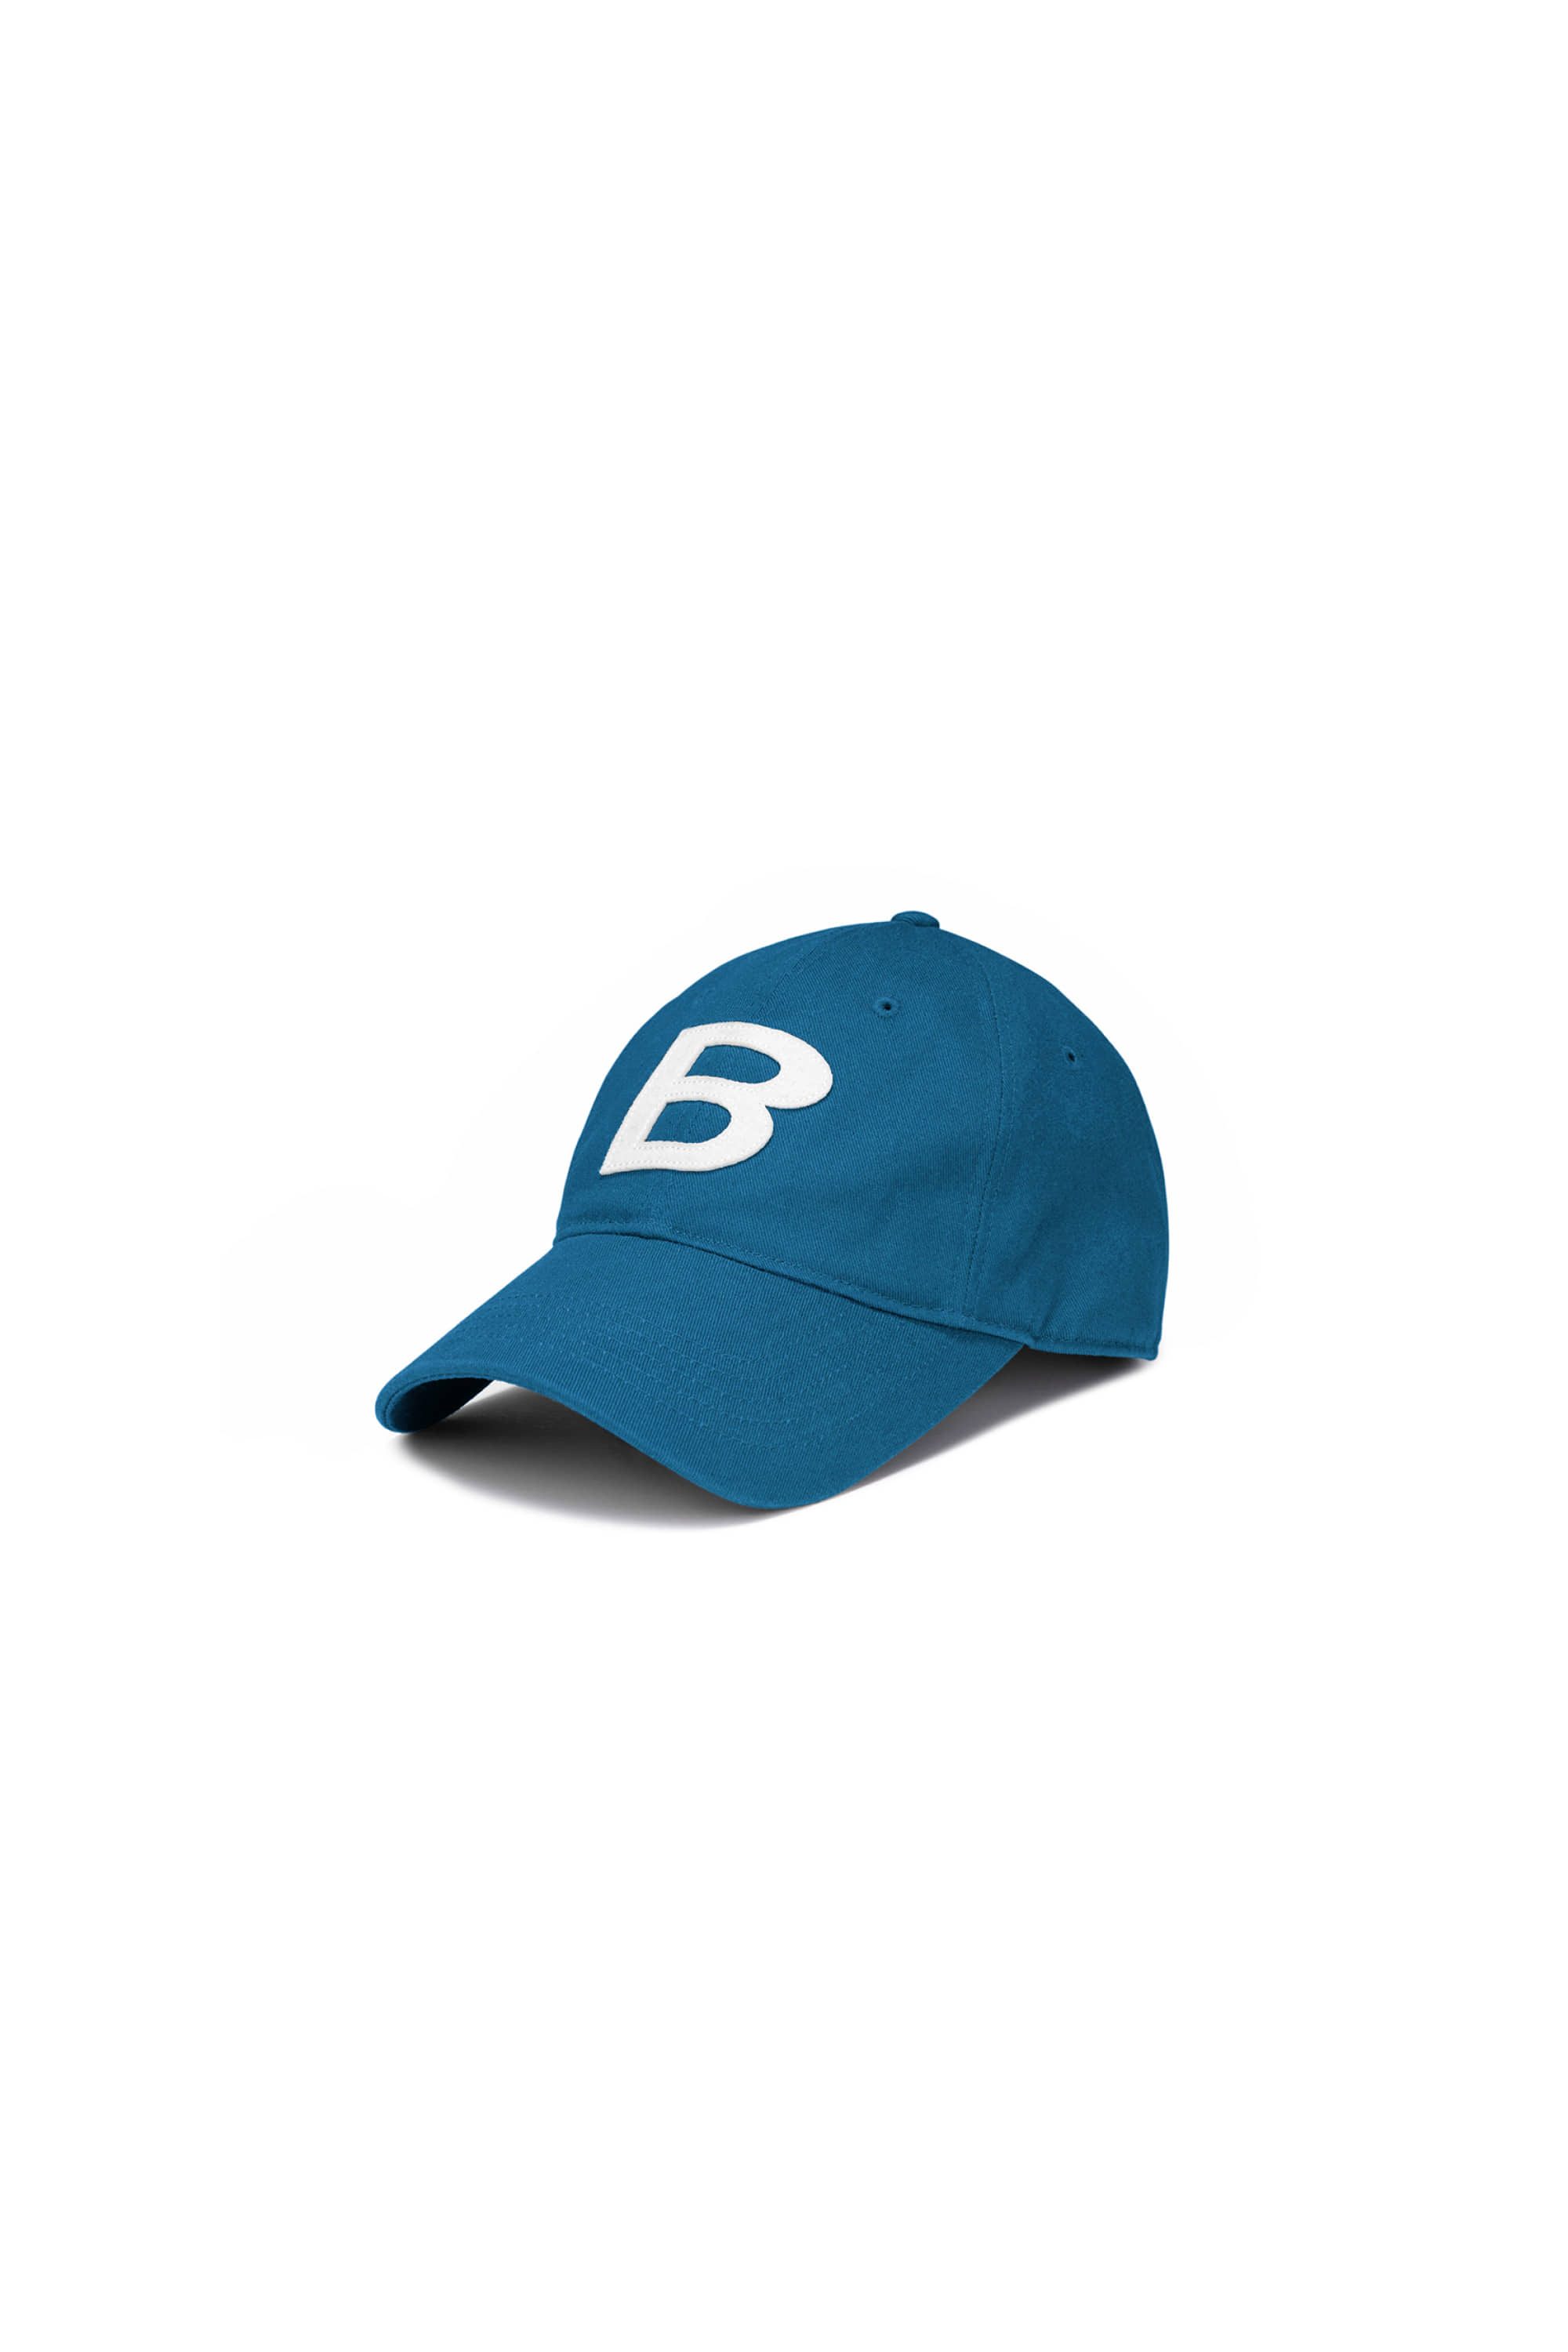 B PATCH CAP_BLUE GREEN